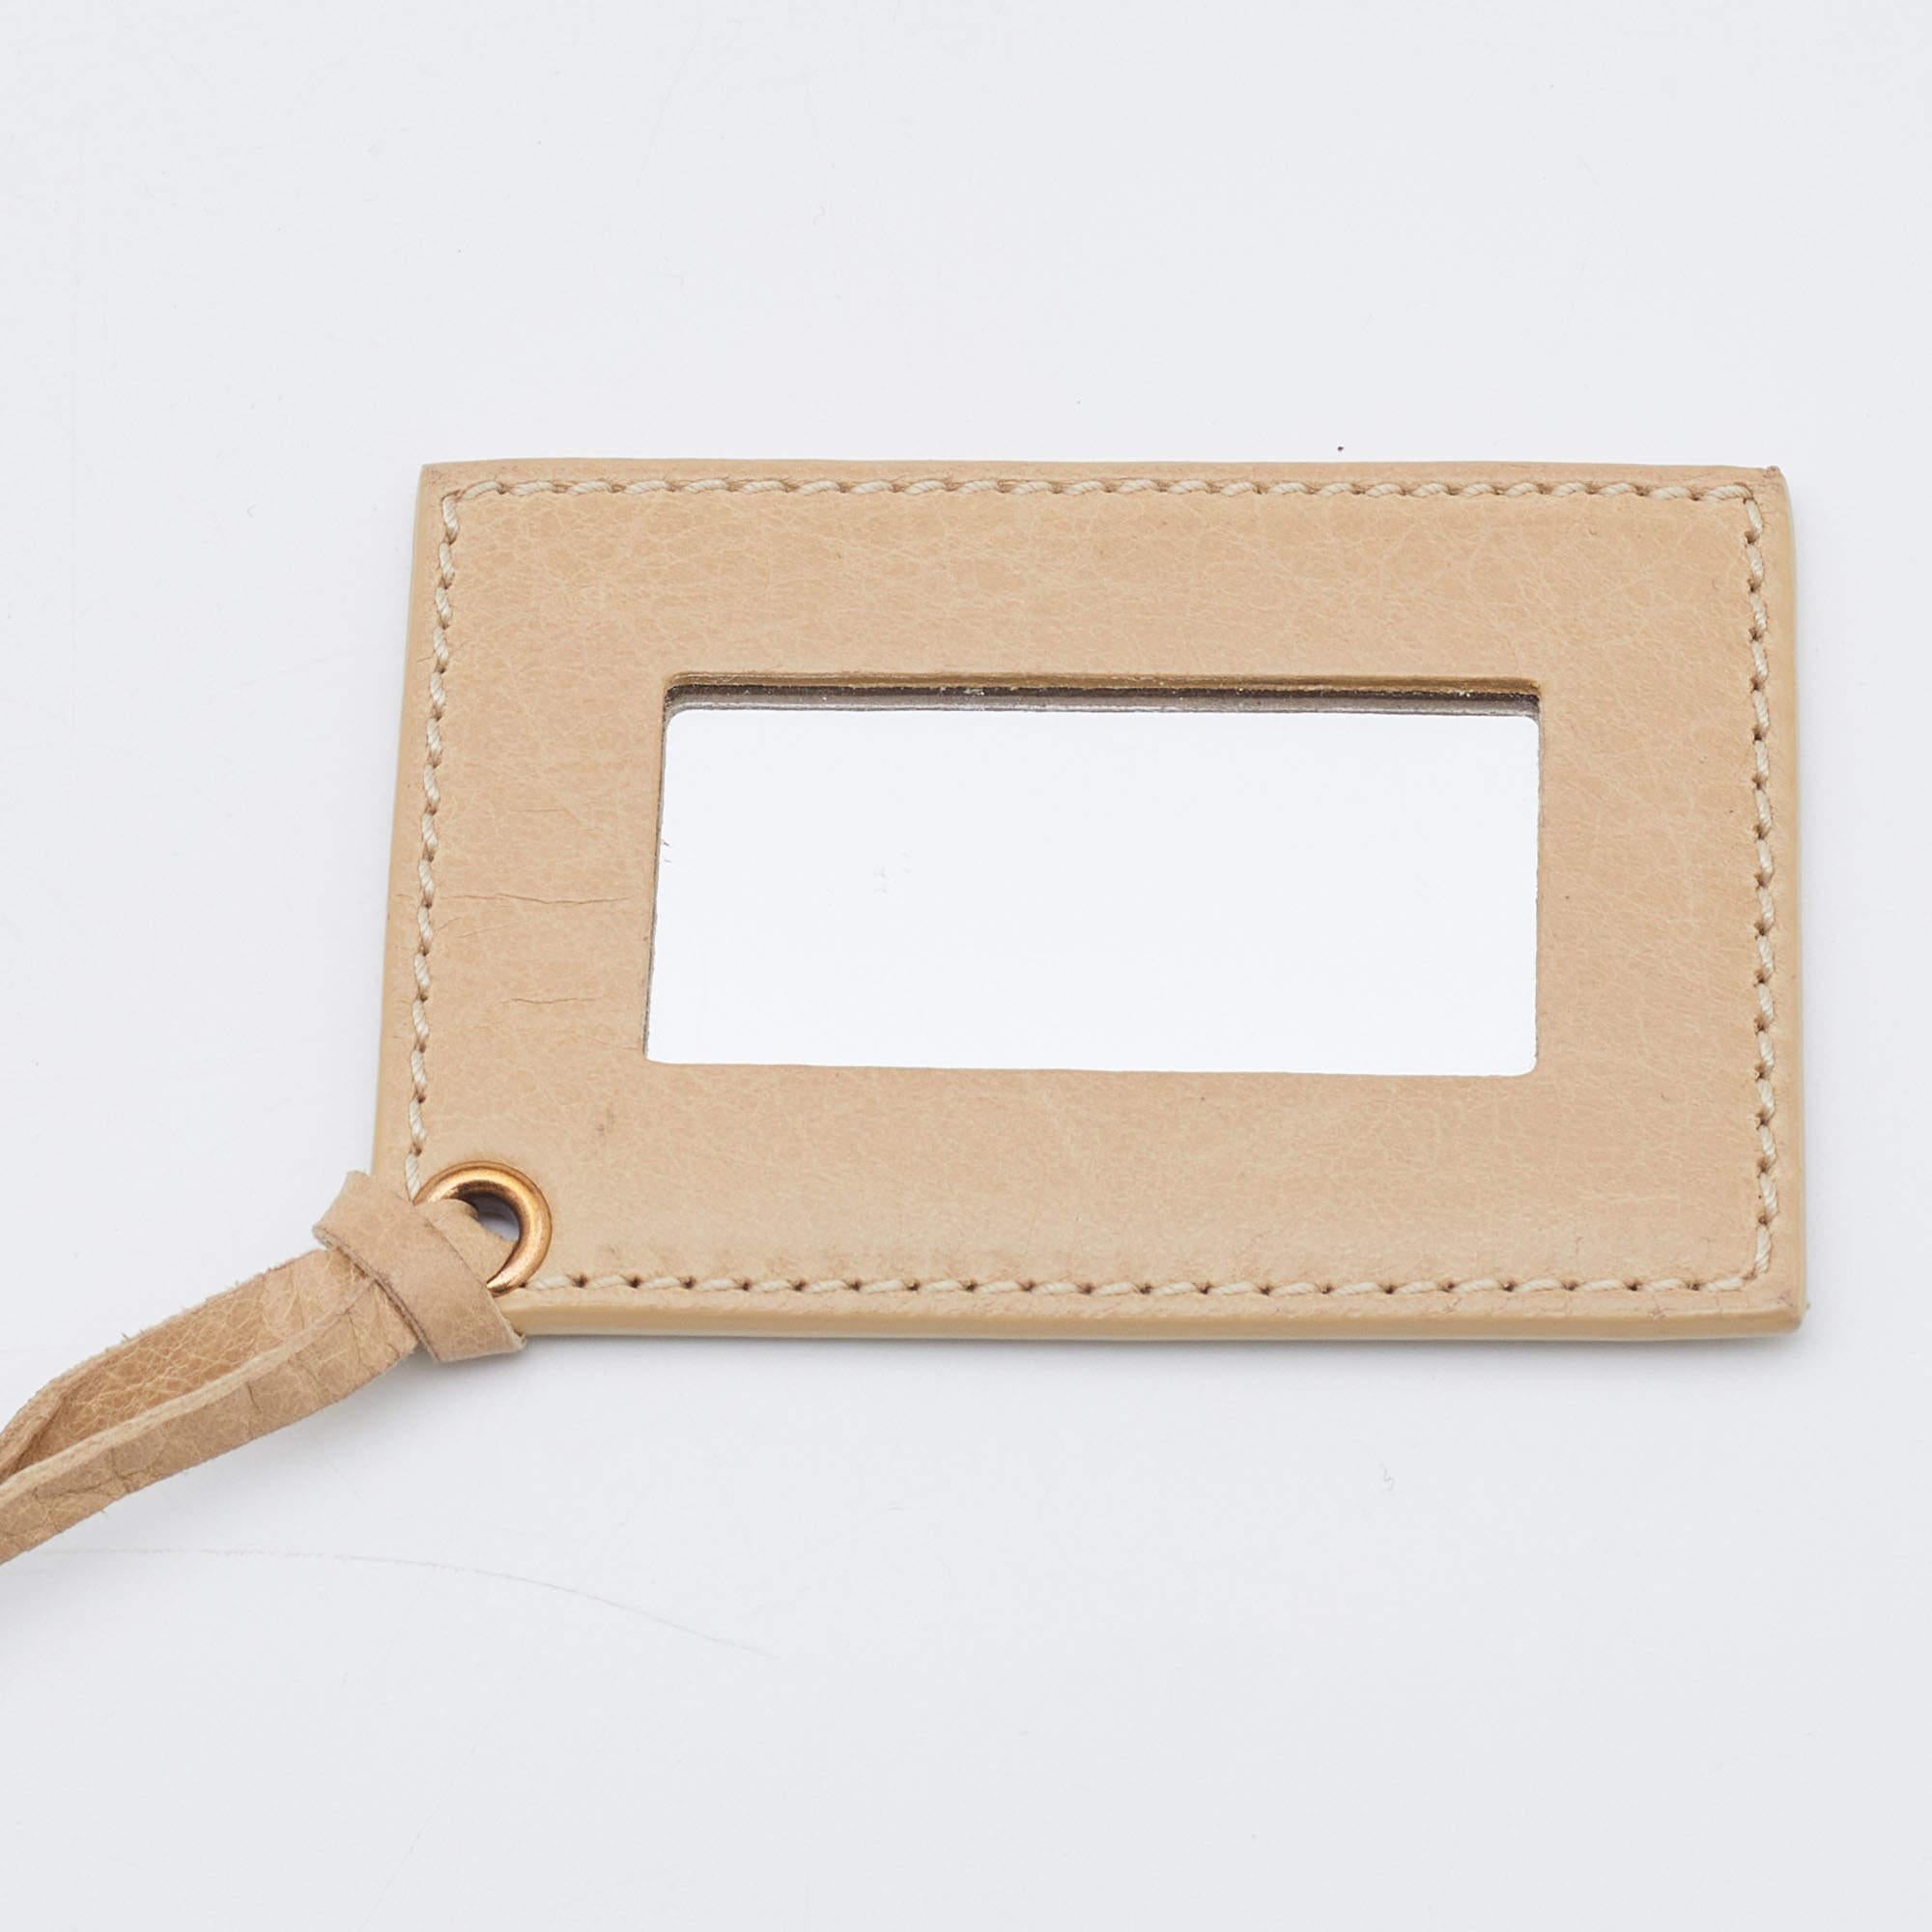 Balenciaga Praline Leather GGH Envelope Clutch 1